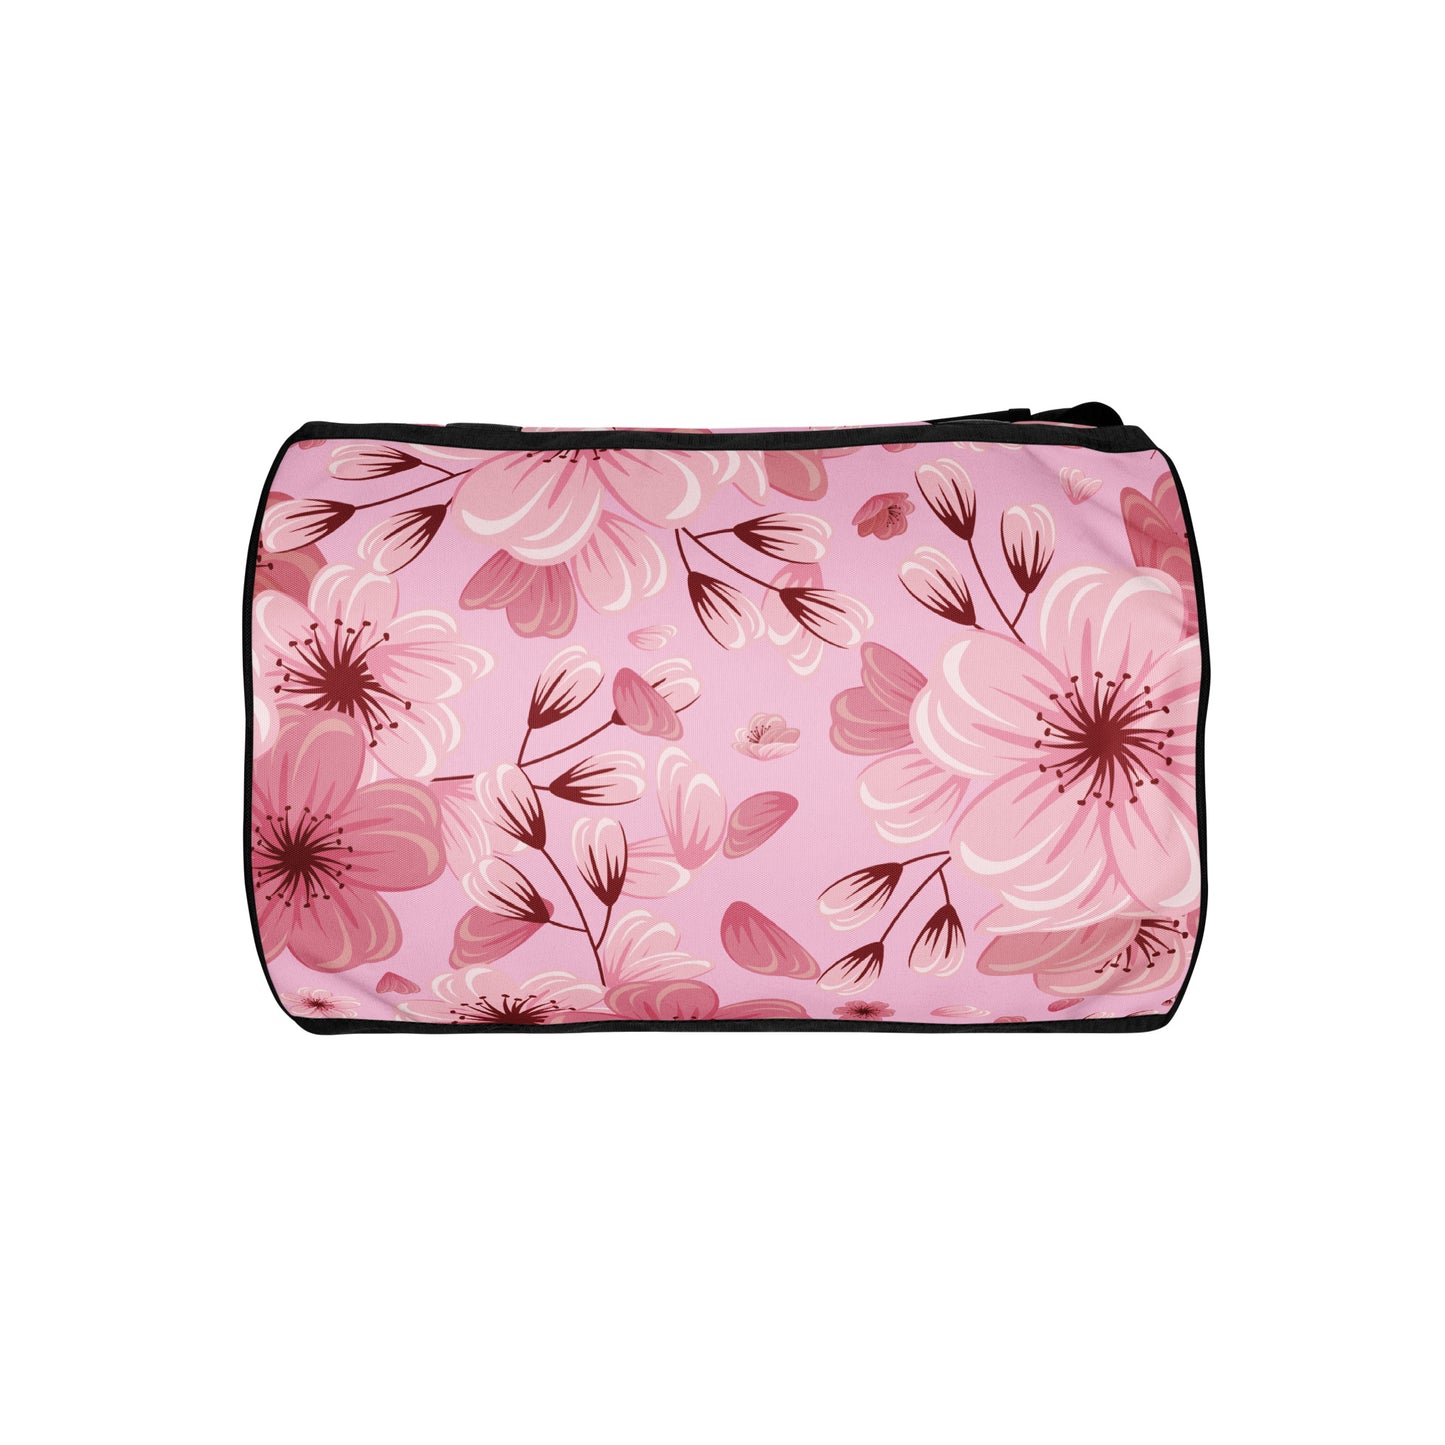 Cherry Blossom - Sustainably Made Gym Bag